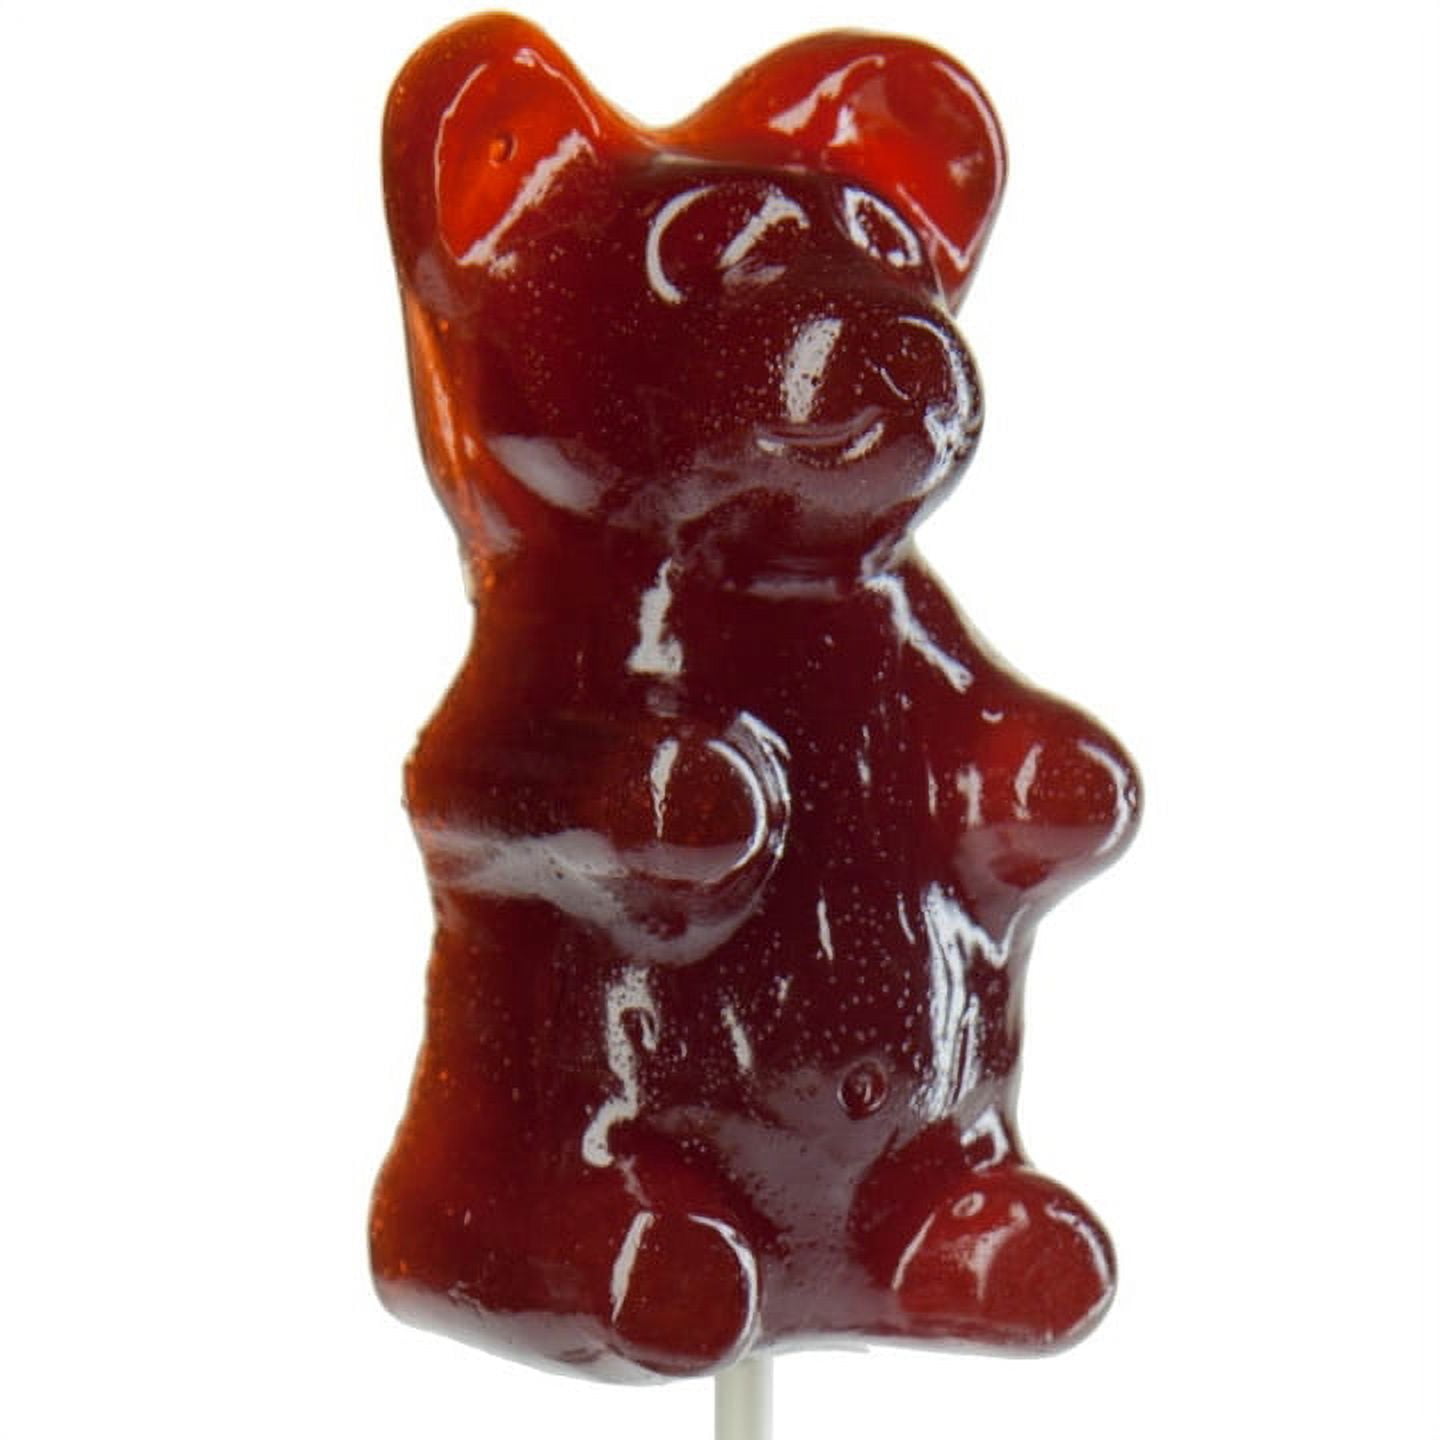 8 oz. Sticky Kine Gummy Bears -  Portugal